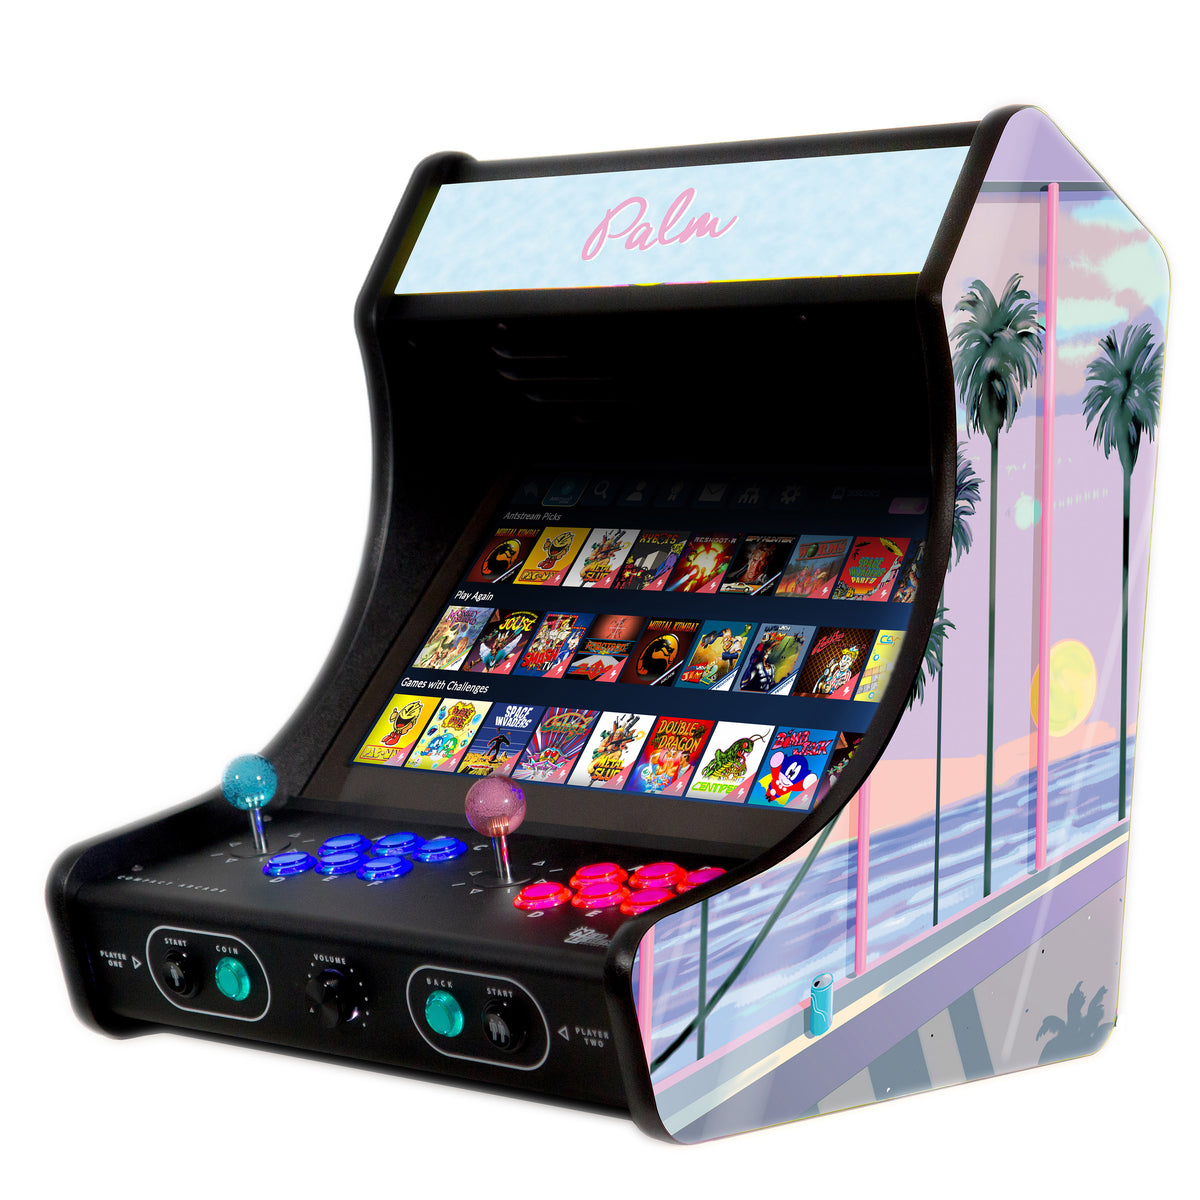 Neo Legend Compact Arcade - Miami Palm artwork by Yoko Honda